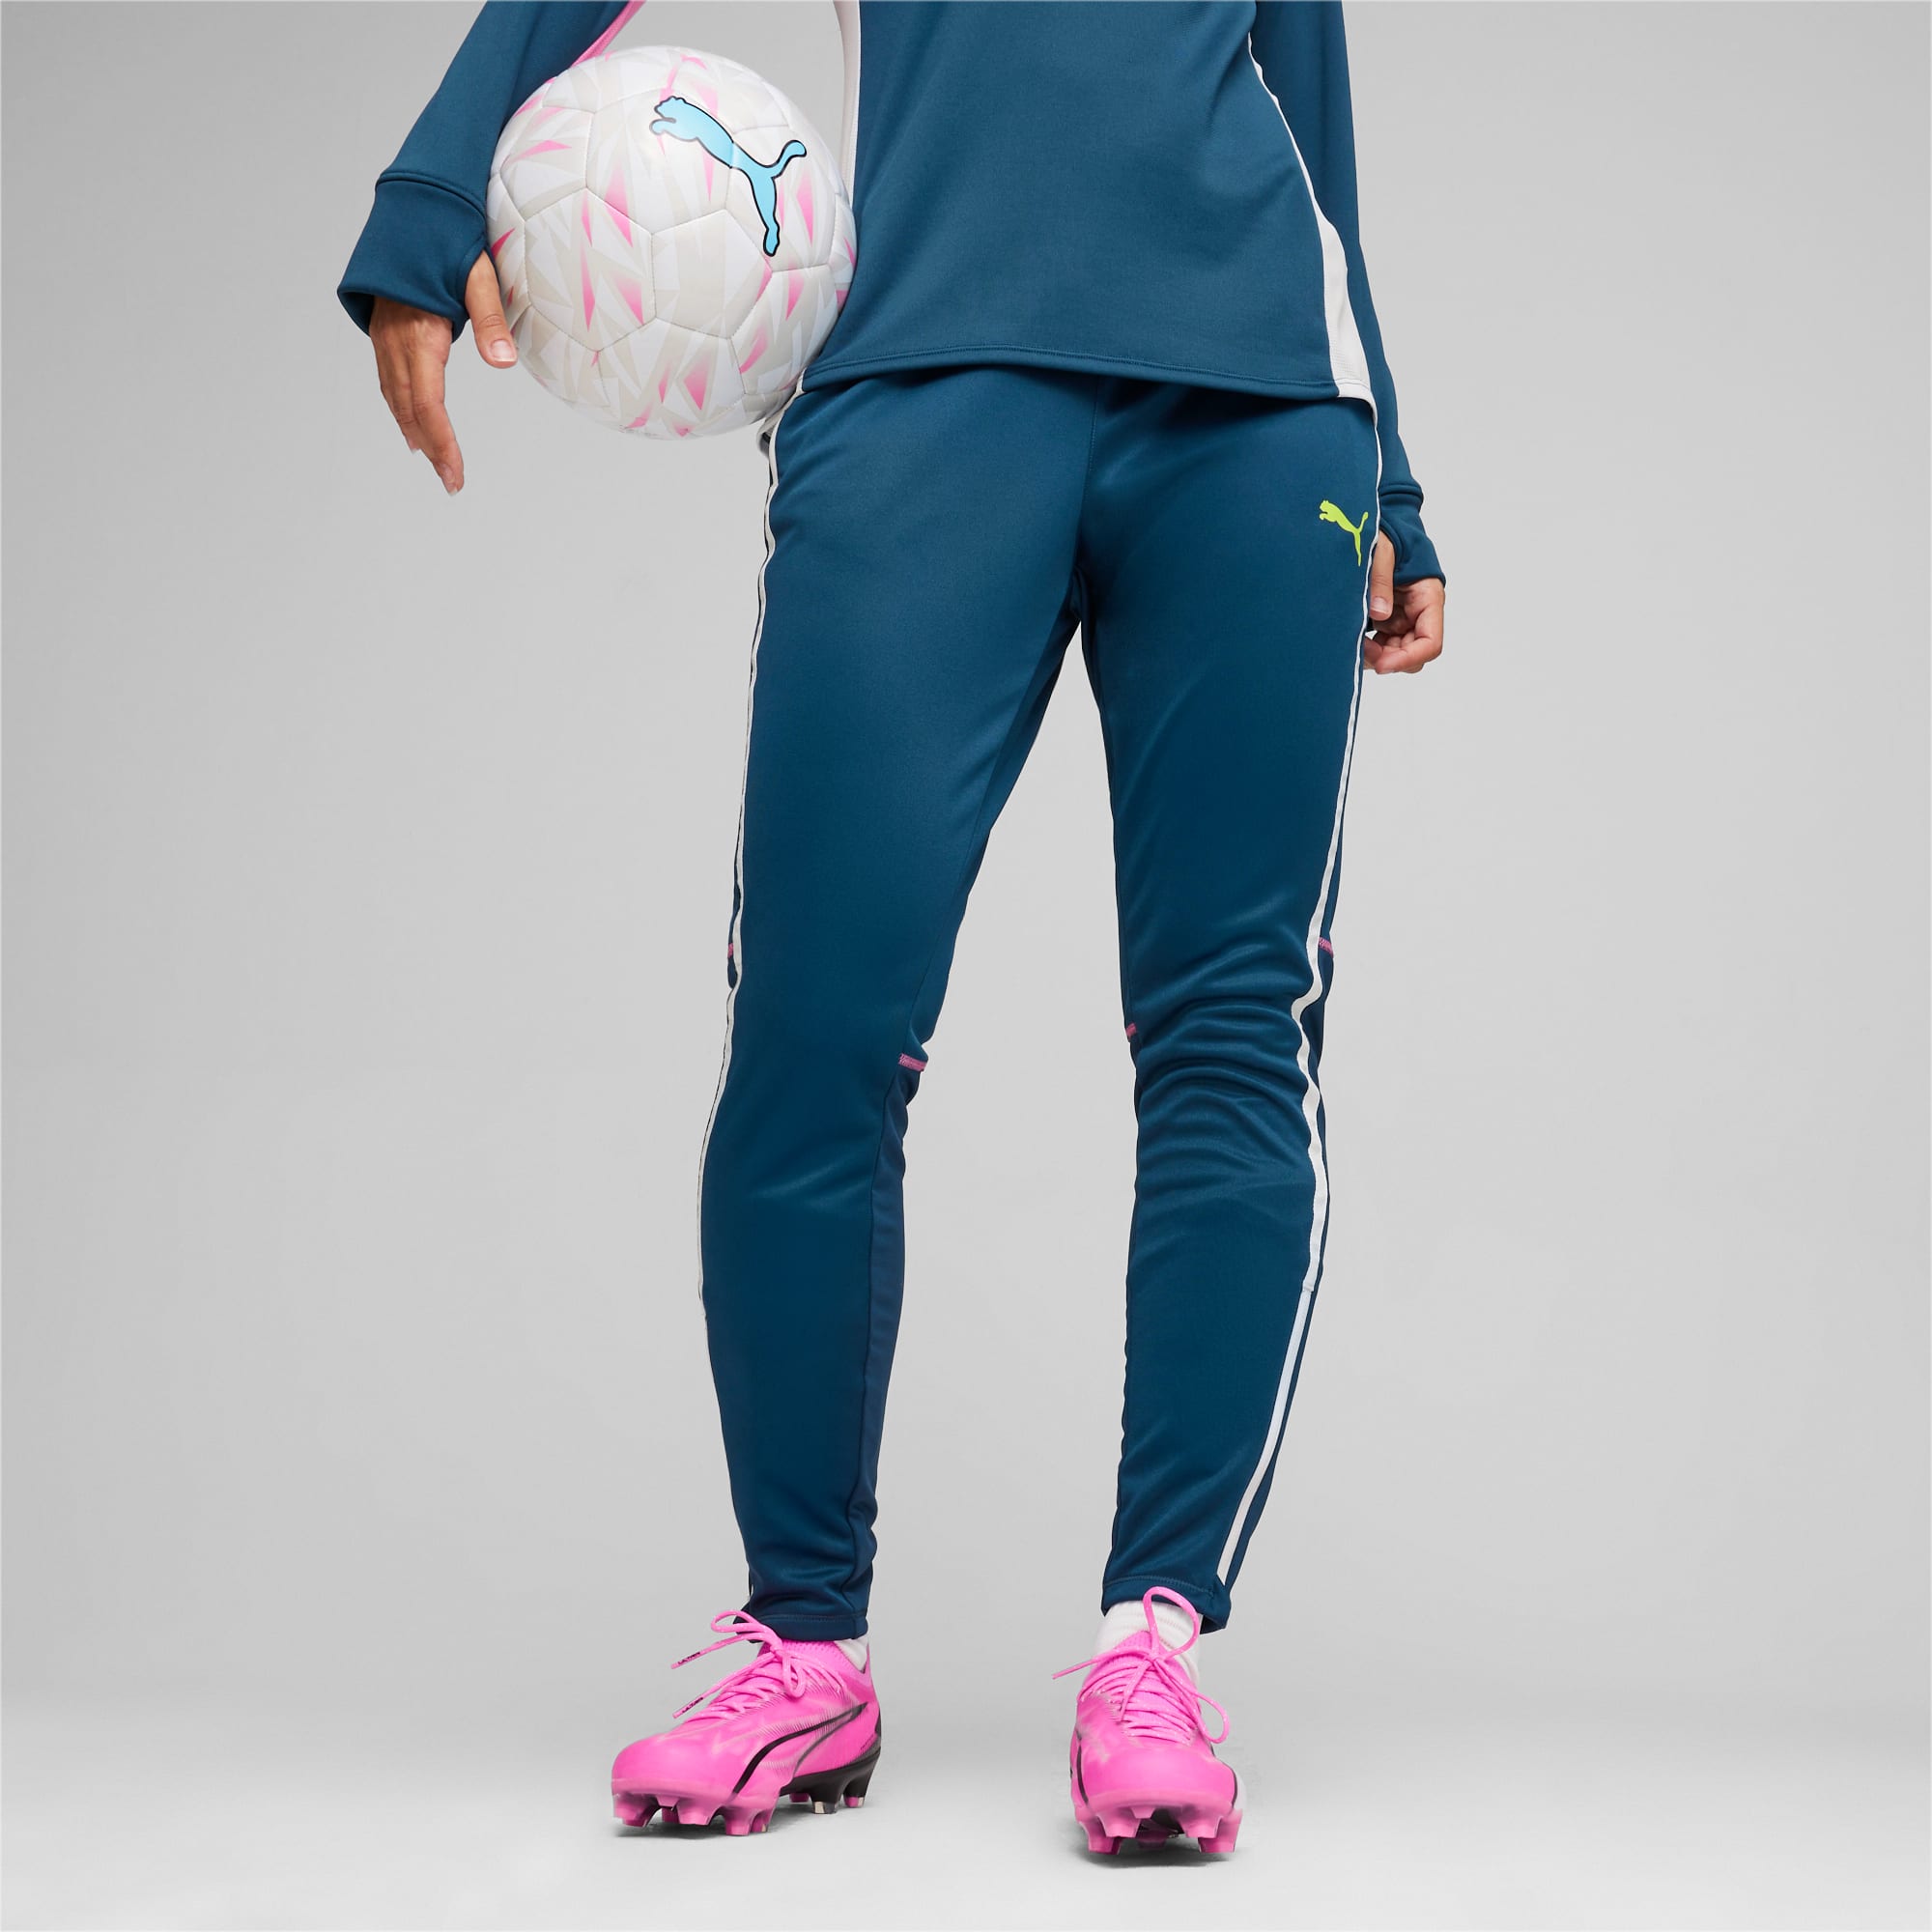 individualBLAZE Women's Football Training Pants | green | PUMA